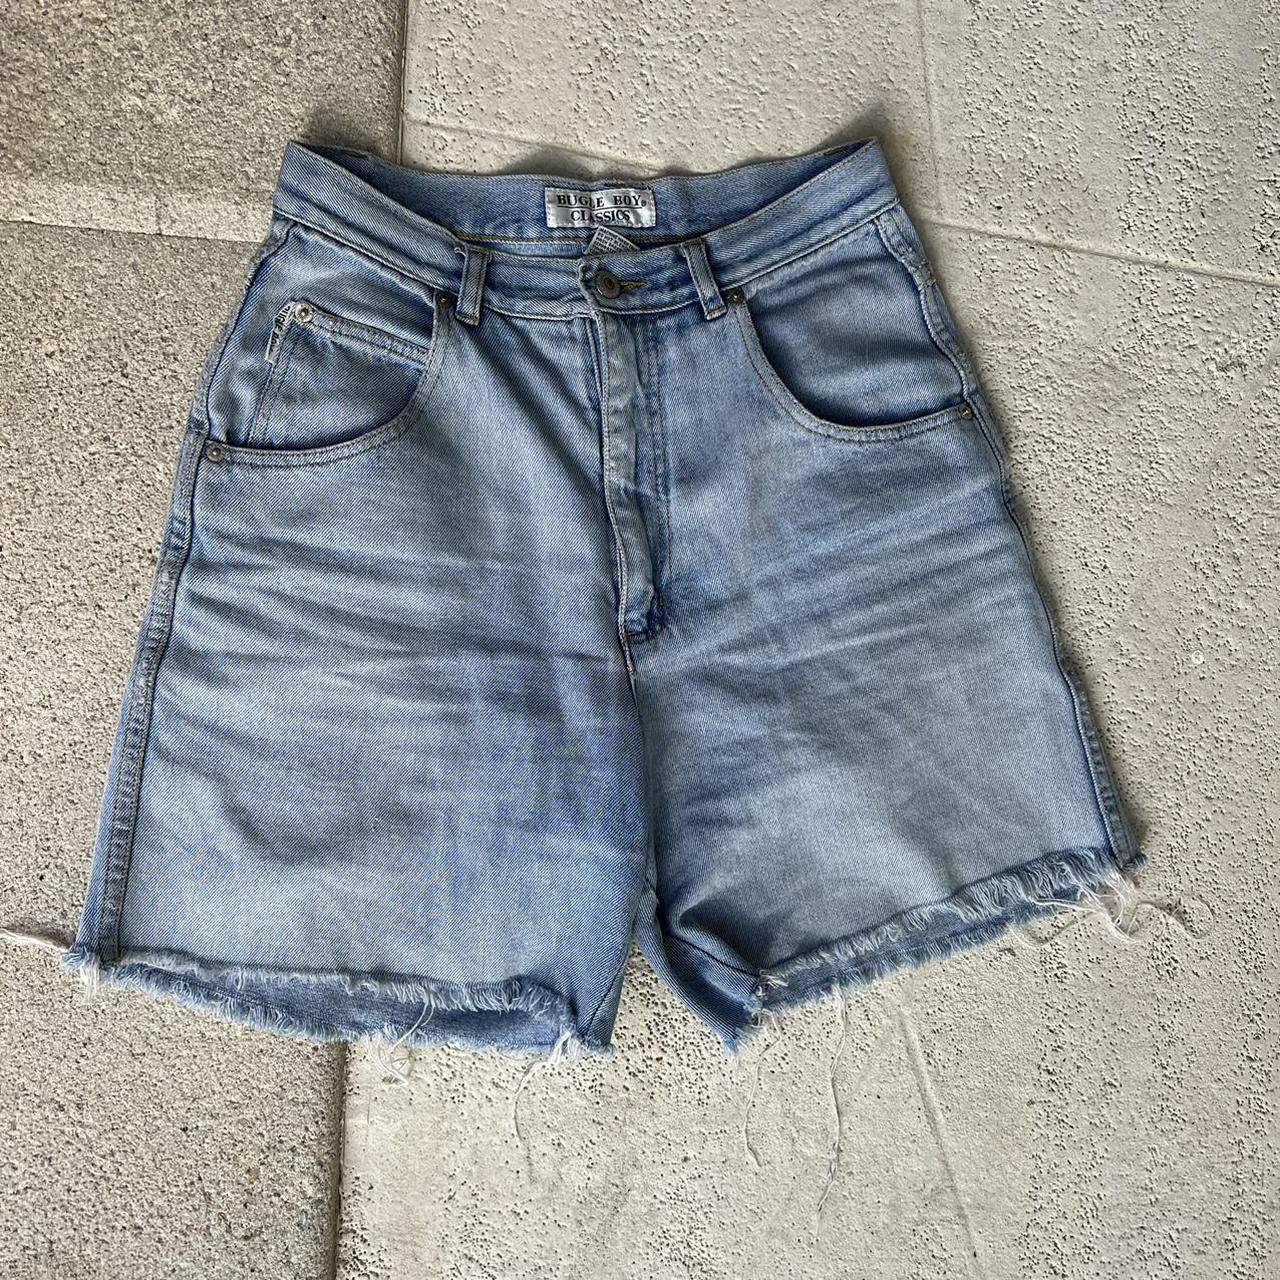 Product Image 1 - Long cut-off denim shorts. High